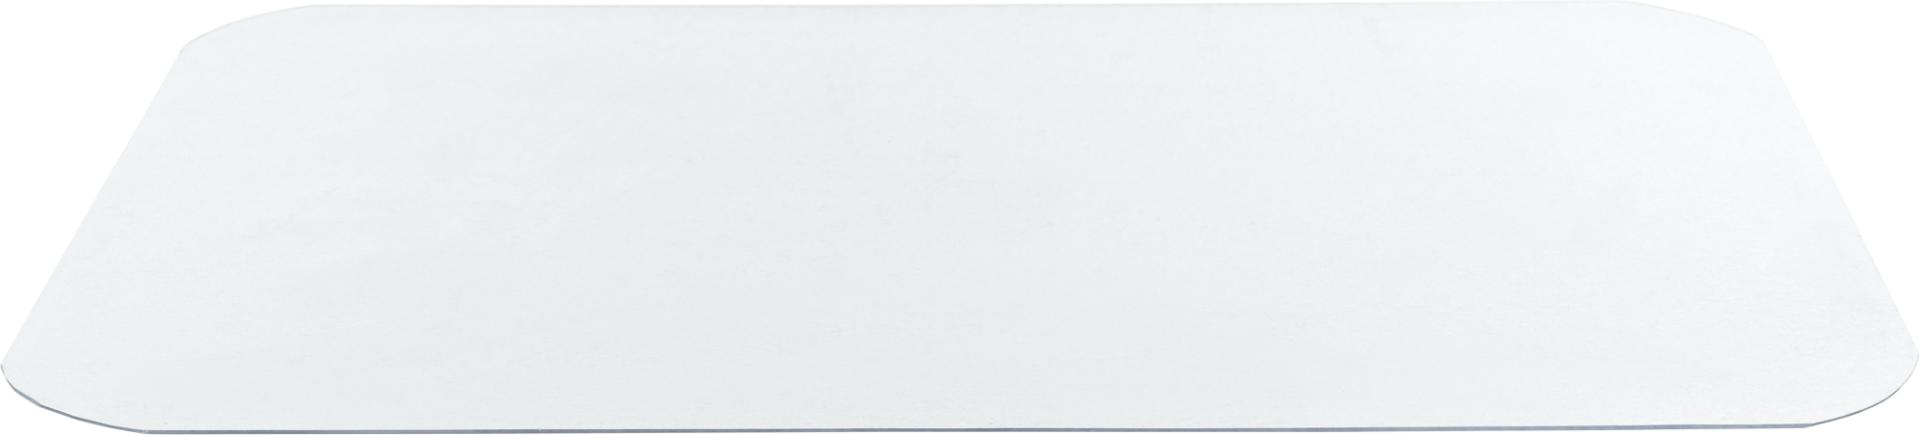 TRIXIE Napfunterlage, Vinyl, 48 x 30 cm, transparent